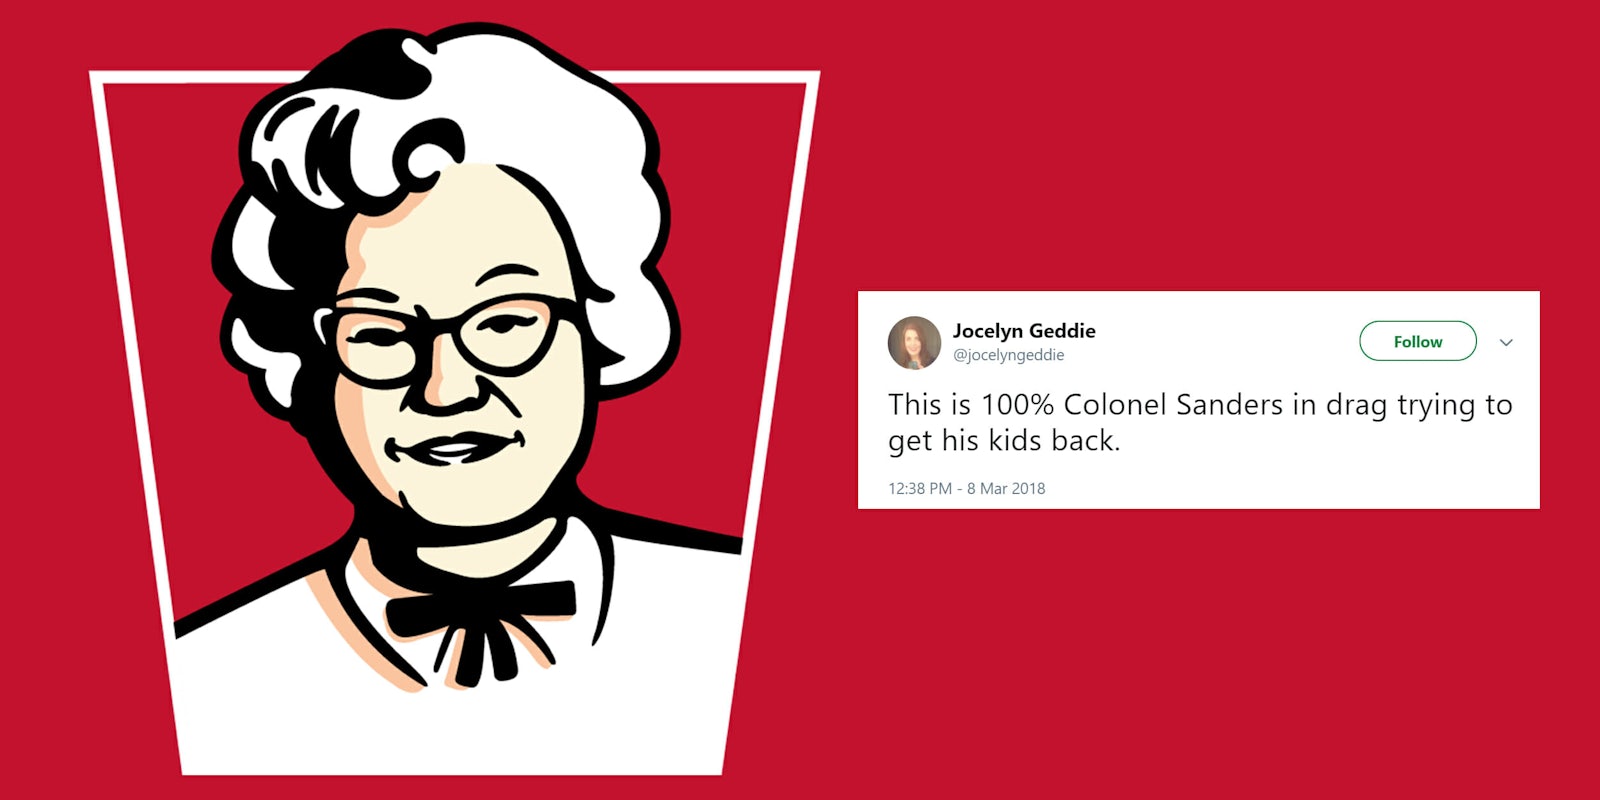 Claudia Sanders KFC logo with 'This is 100% Colonel Sanders in drag trying to get his kids back.' tweet